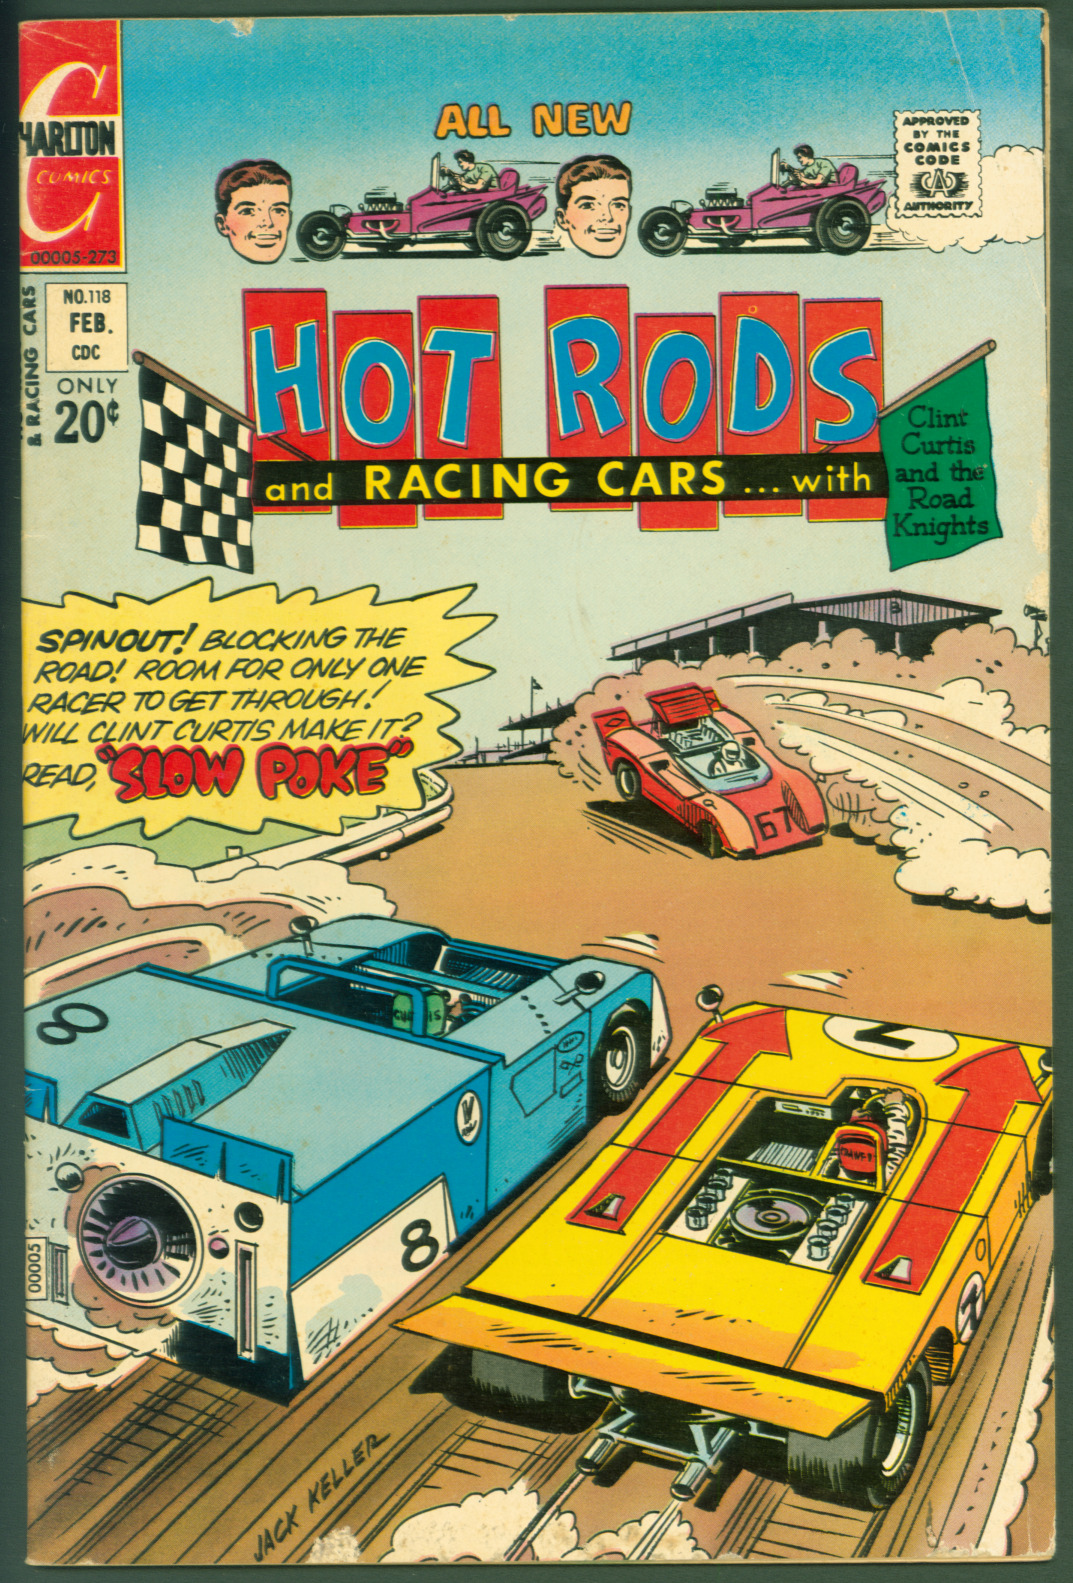 VTG 1973 Charlton Comics Hot Rods & Racing Cars #118 FINE-  Slow Poke